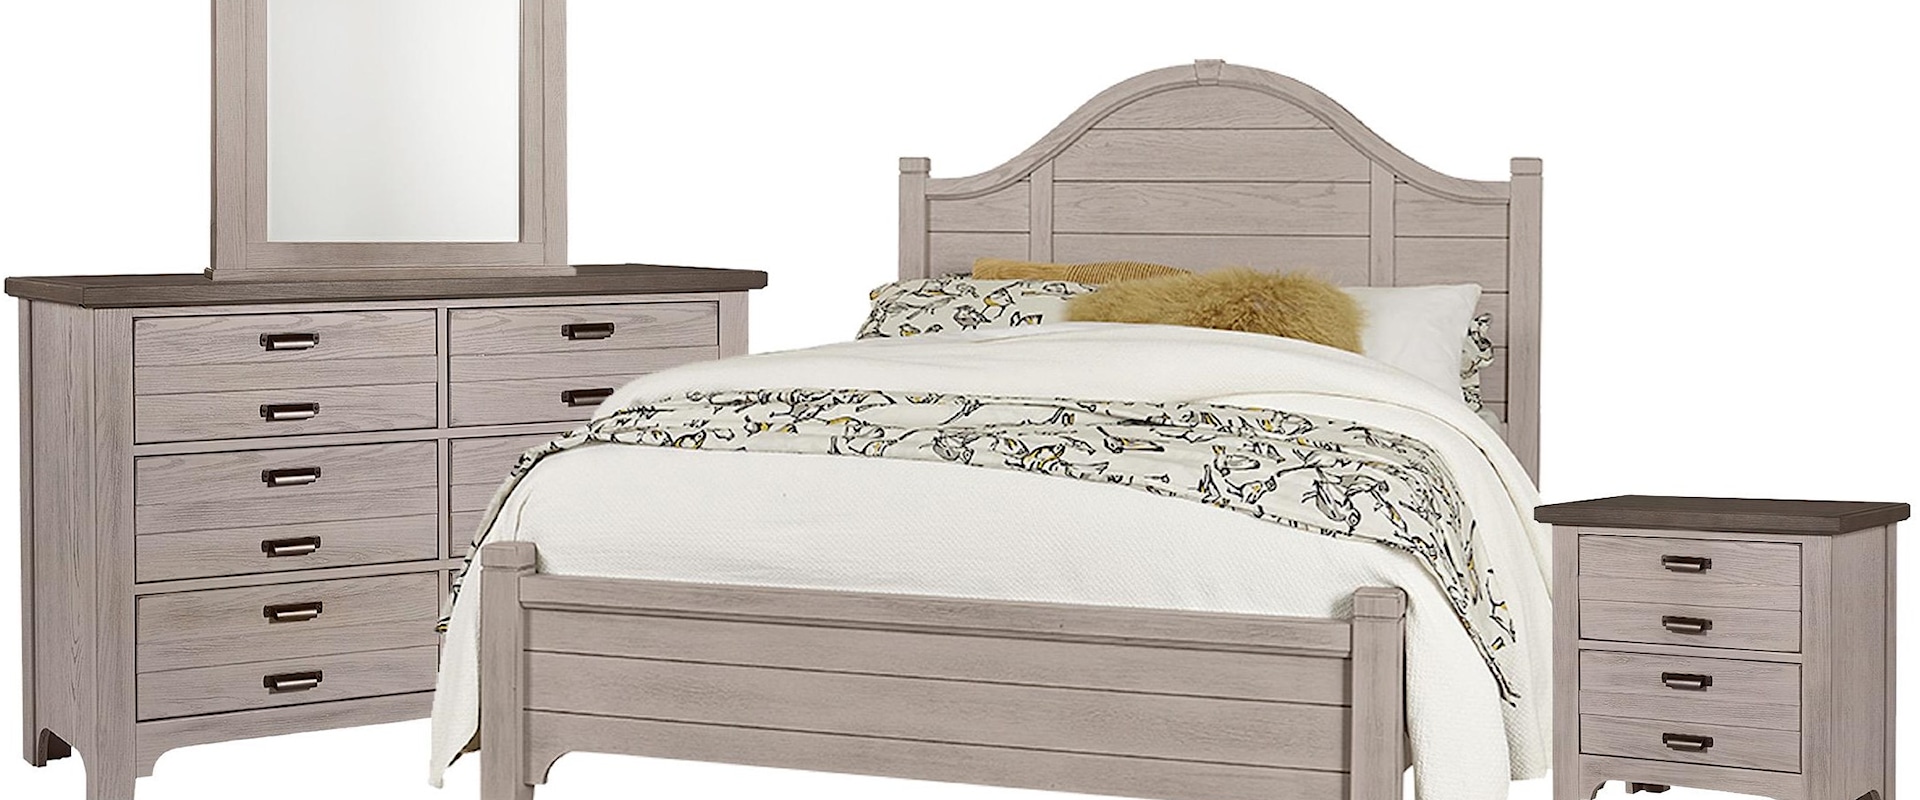 Queen Arch Bed, Double Dresser, Arch Mirror, 2 Drawer Nightstand